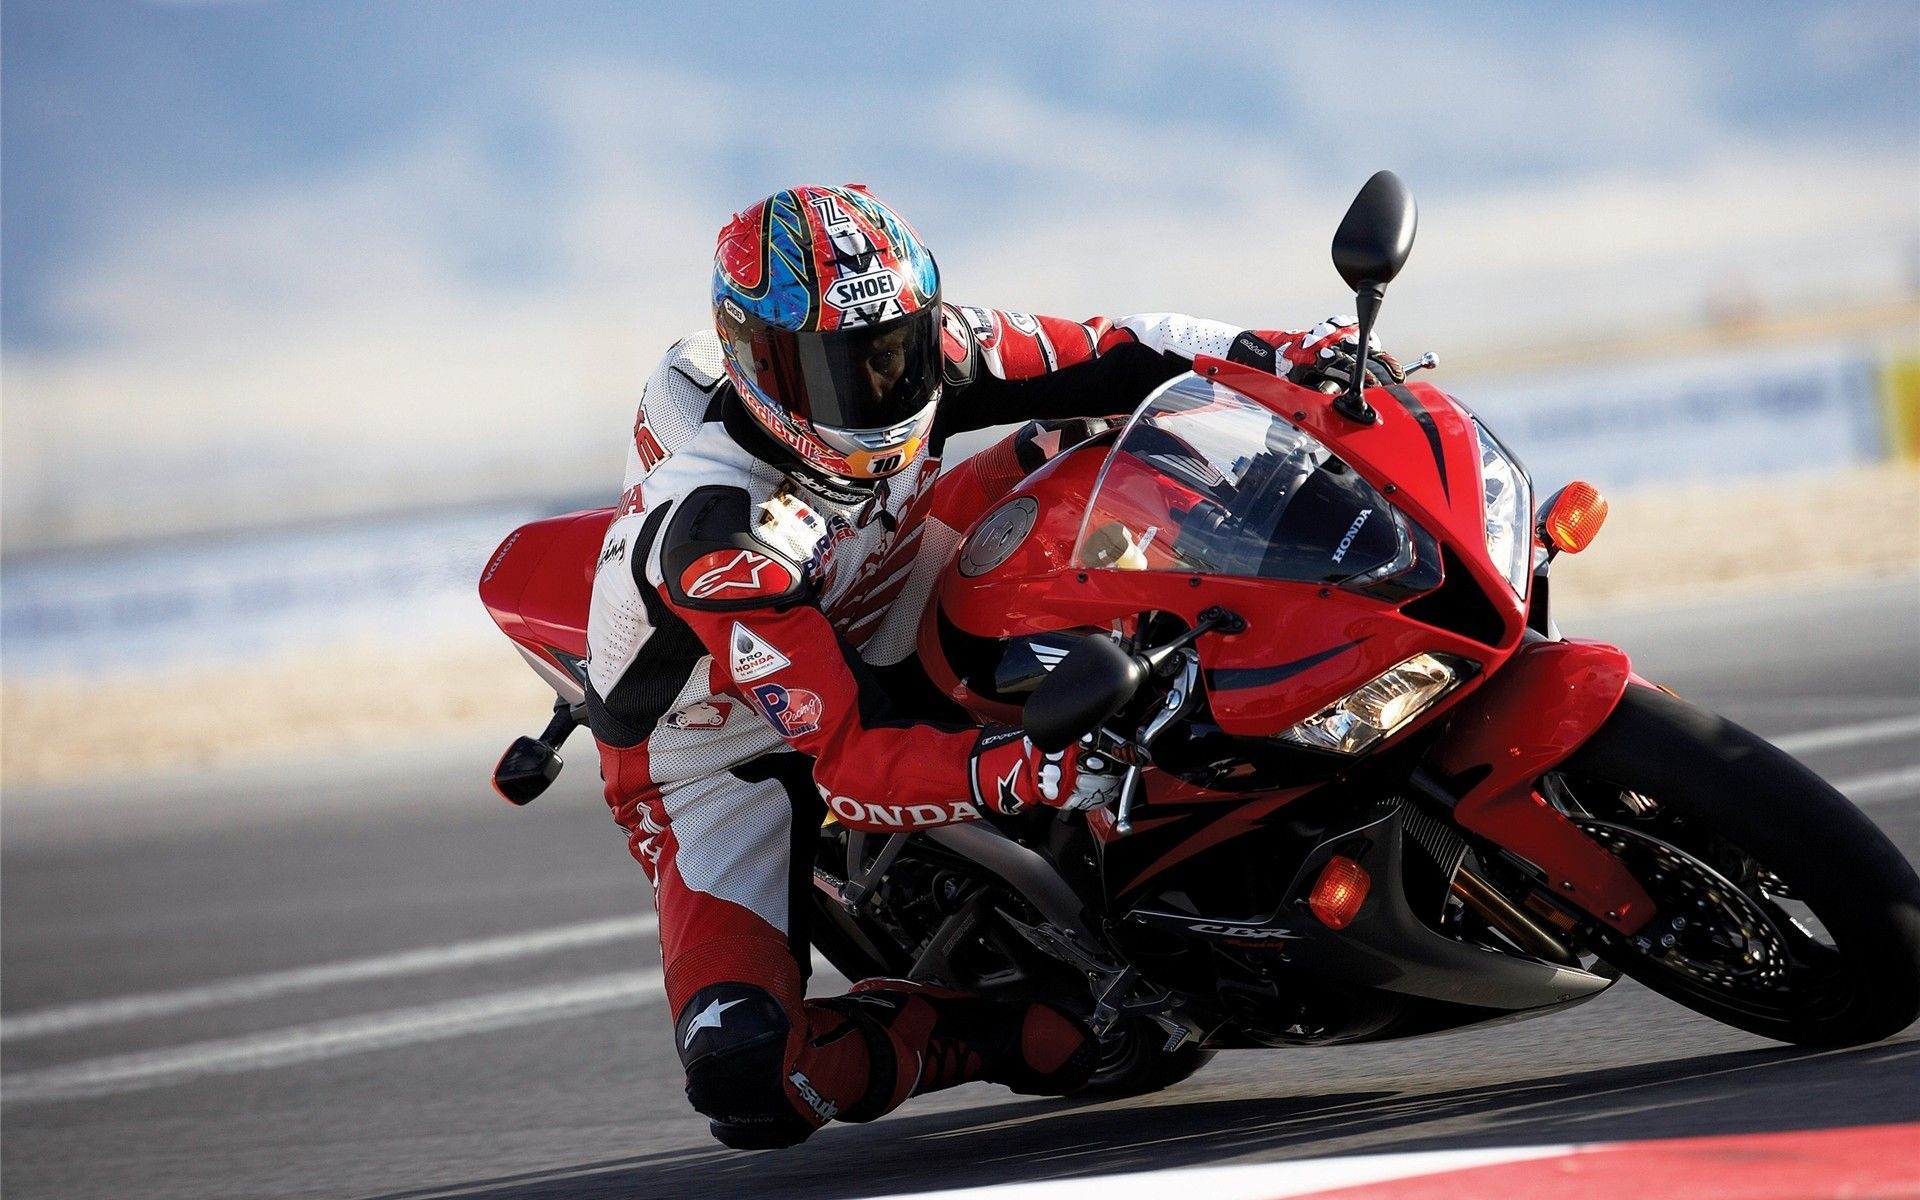 Motorcycle Racing: Honda CBR 600 RR, Free Ride, Speedway. 1920x1200 HD Background.